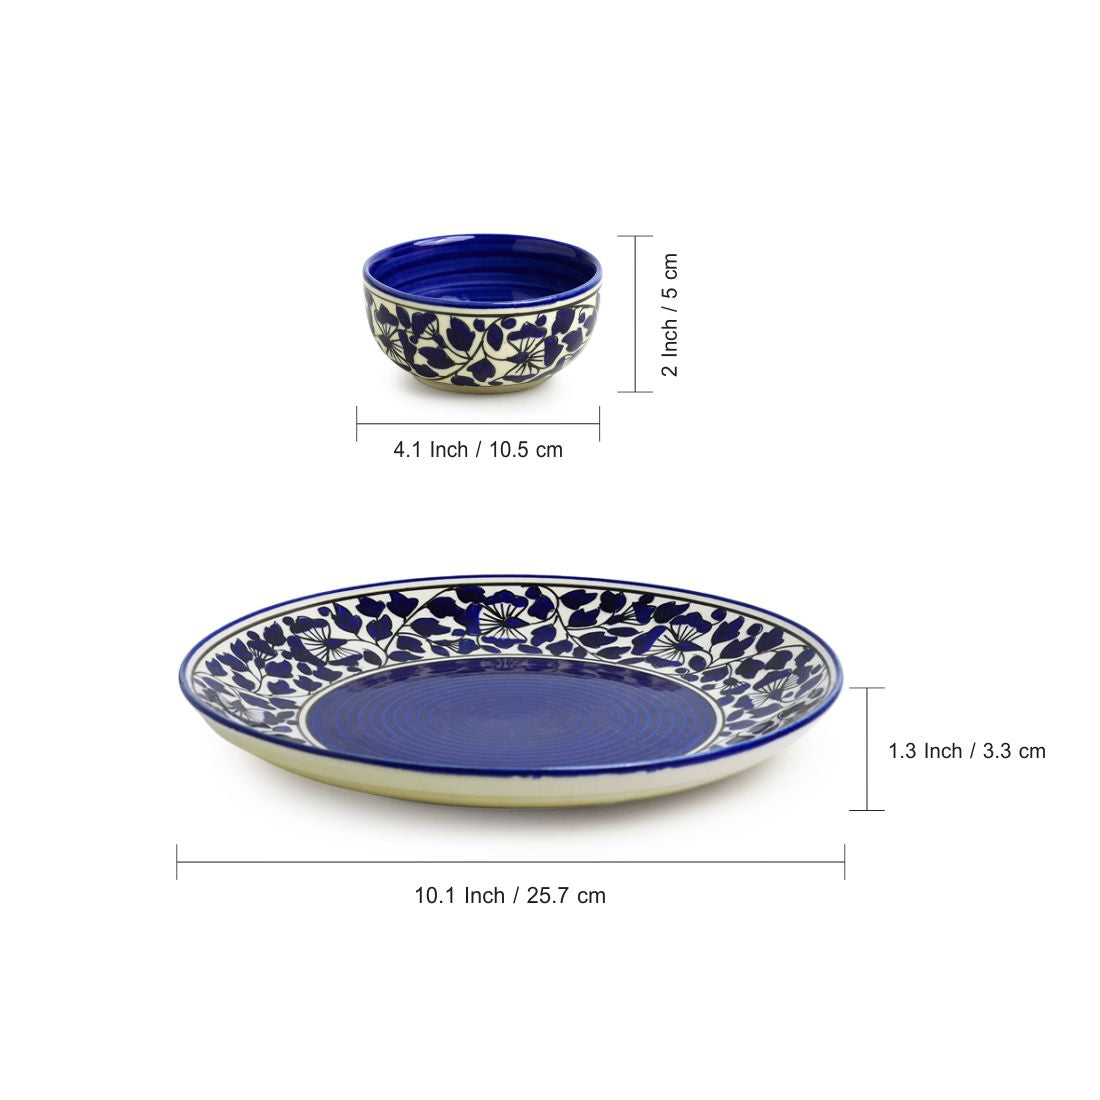 Badamwari Bagheecha-2' Handpainted Ceramic Dinner Plate With Dinner Katoris (3 Pieces, Serving for 1, Microwave Safe)